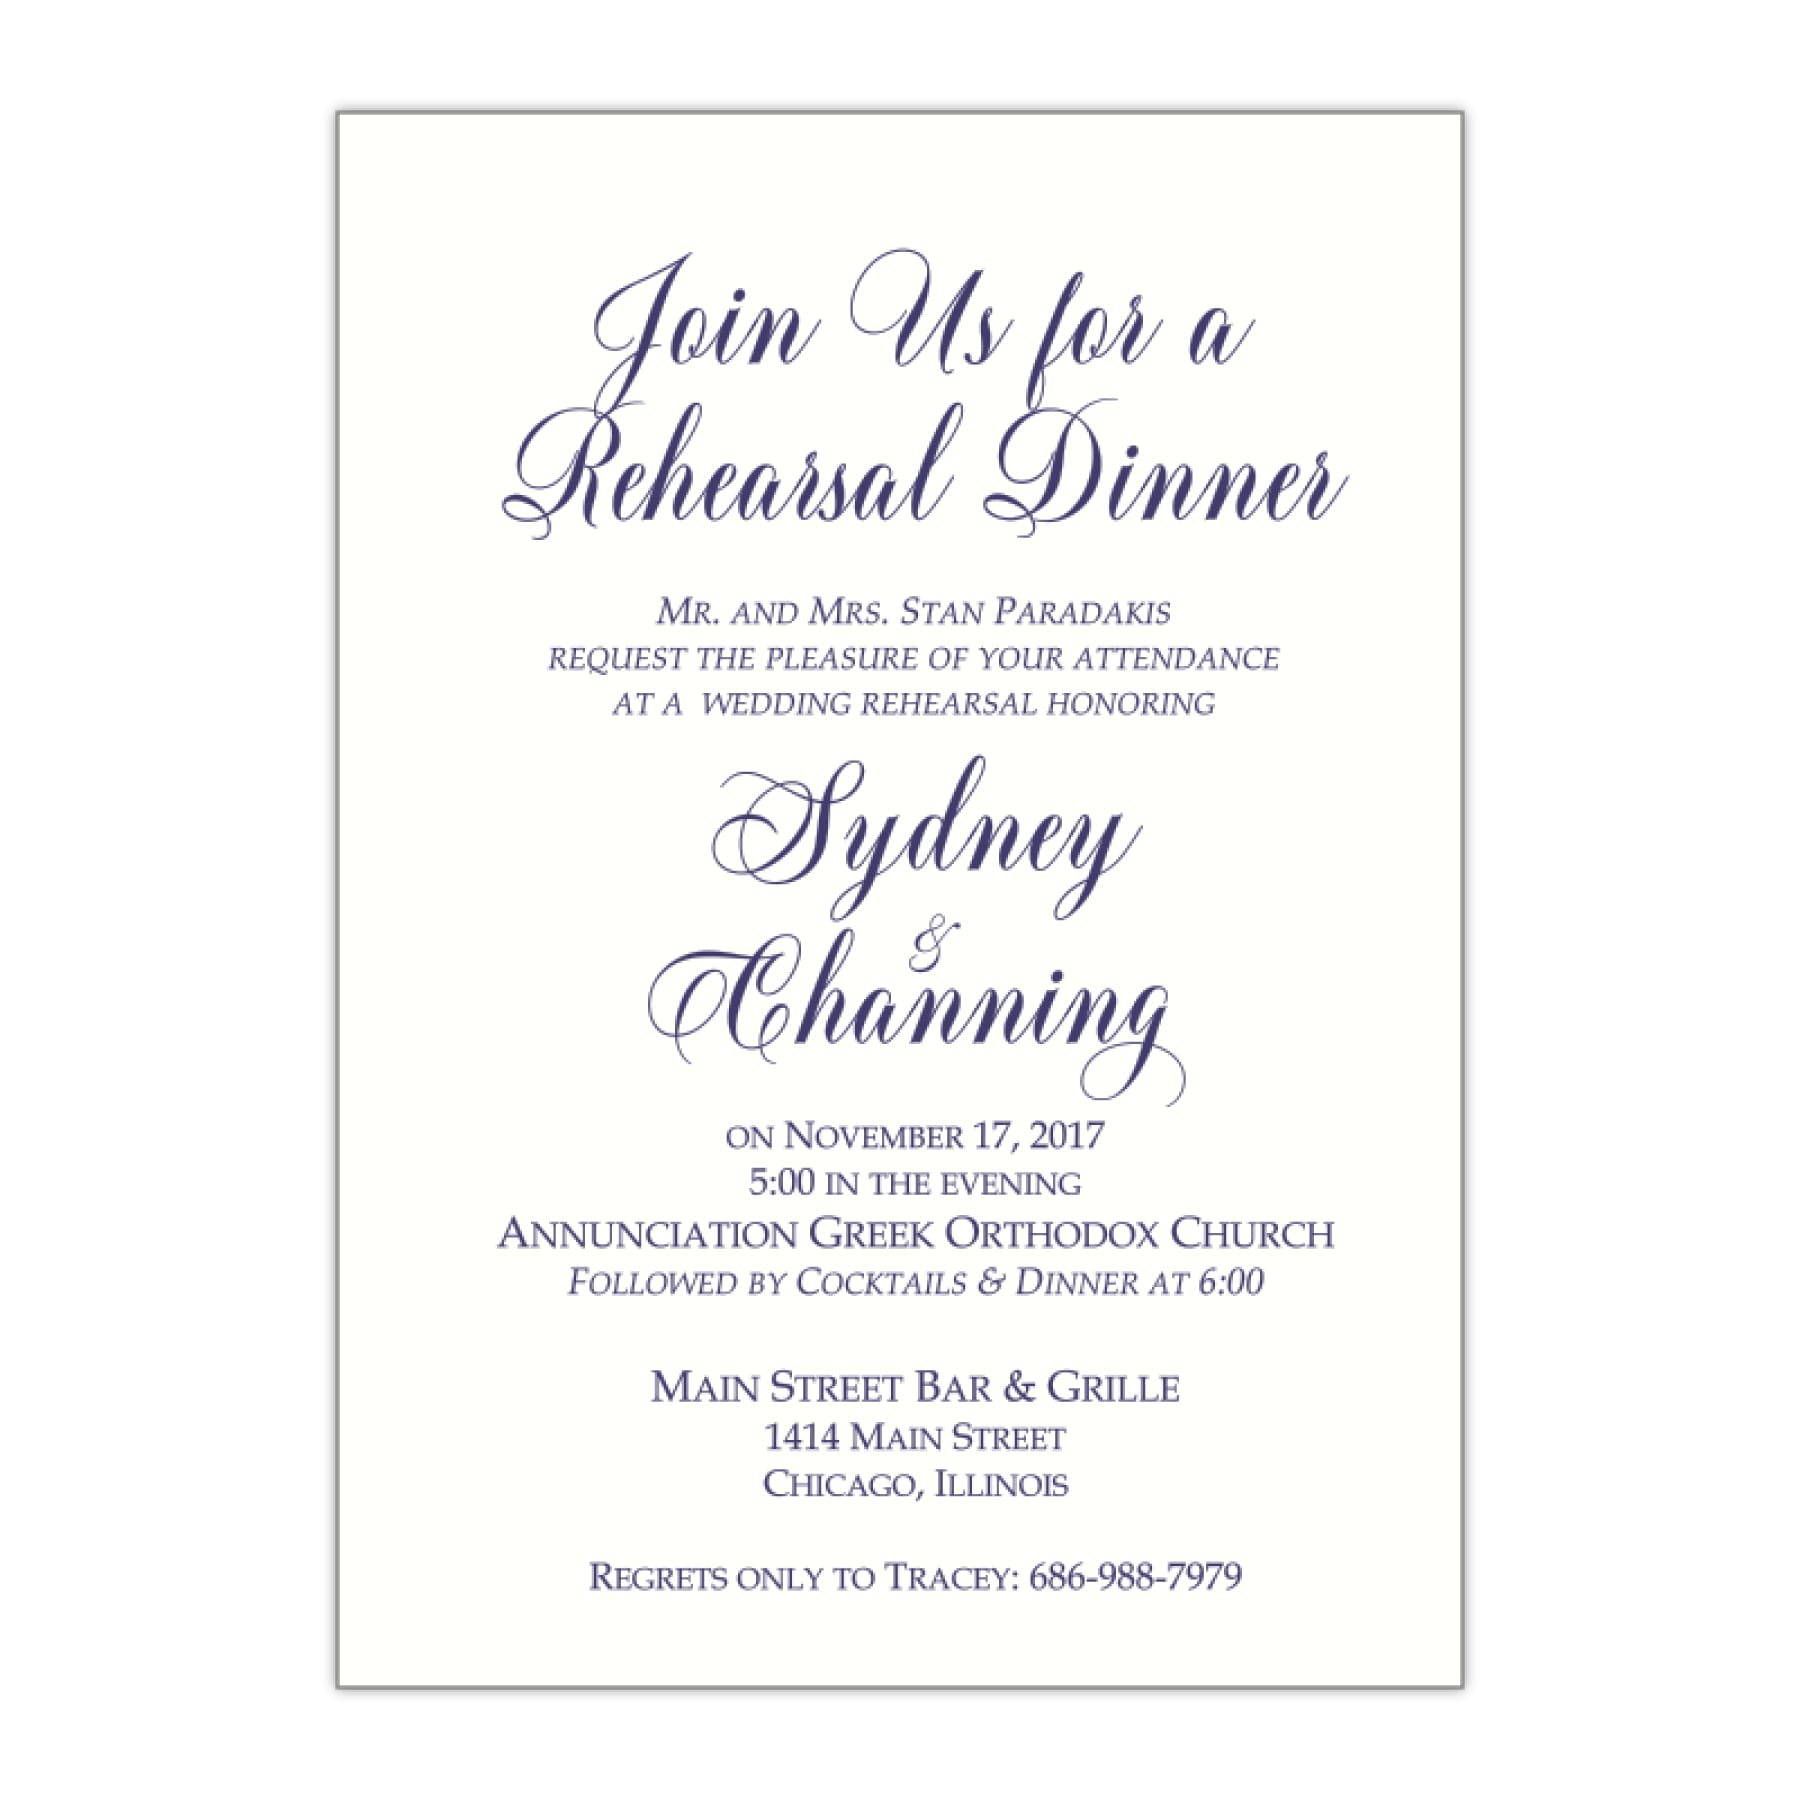 Rehearsal Dinner Invitation, Sydney - All That Glitters Invitations